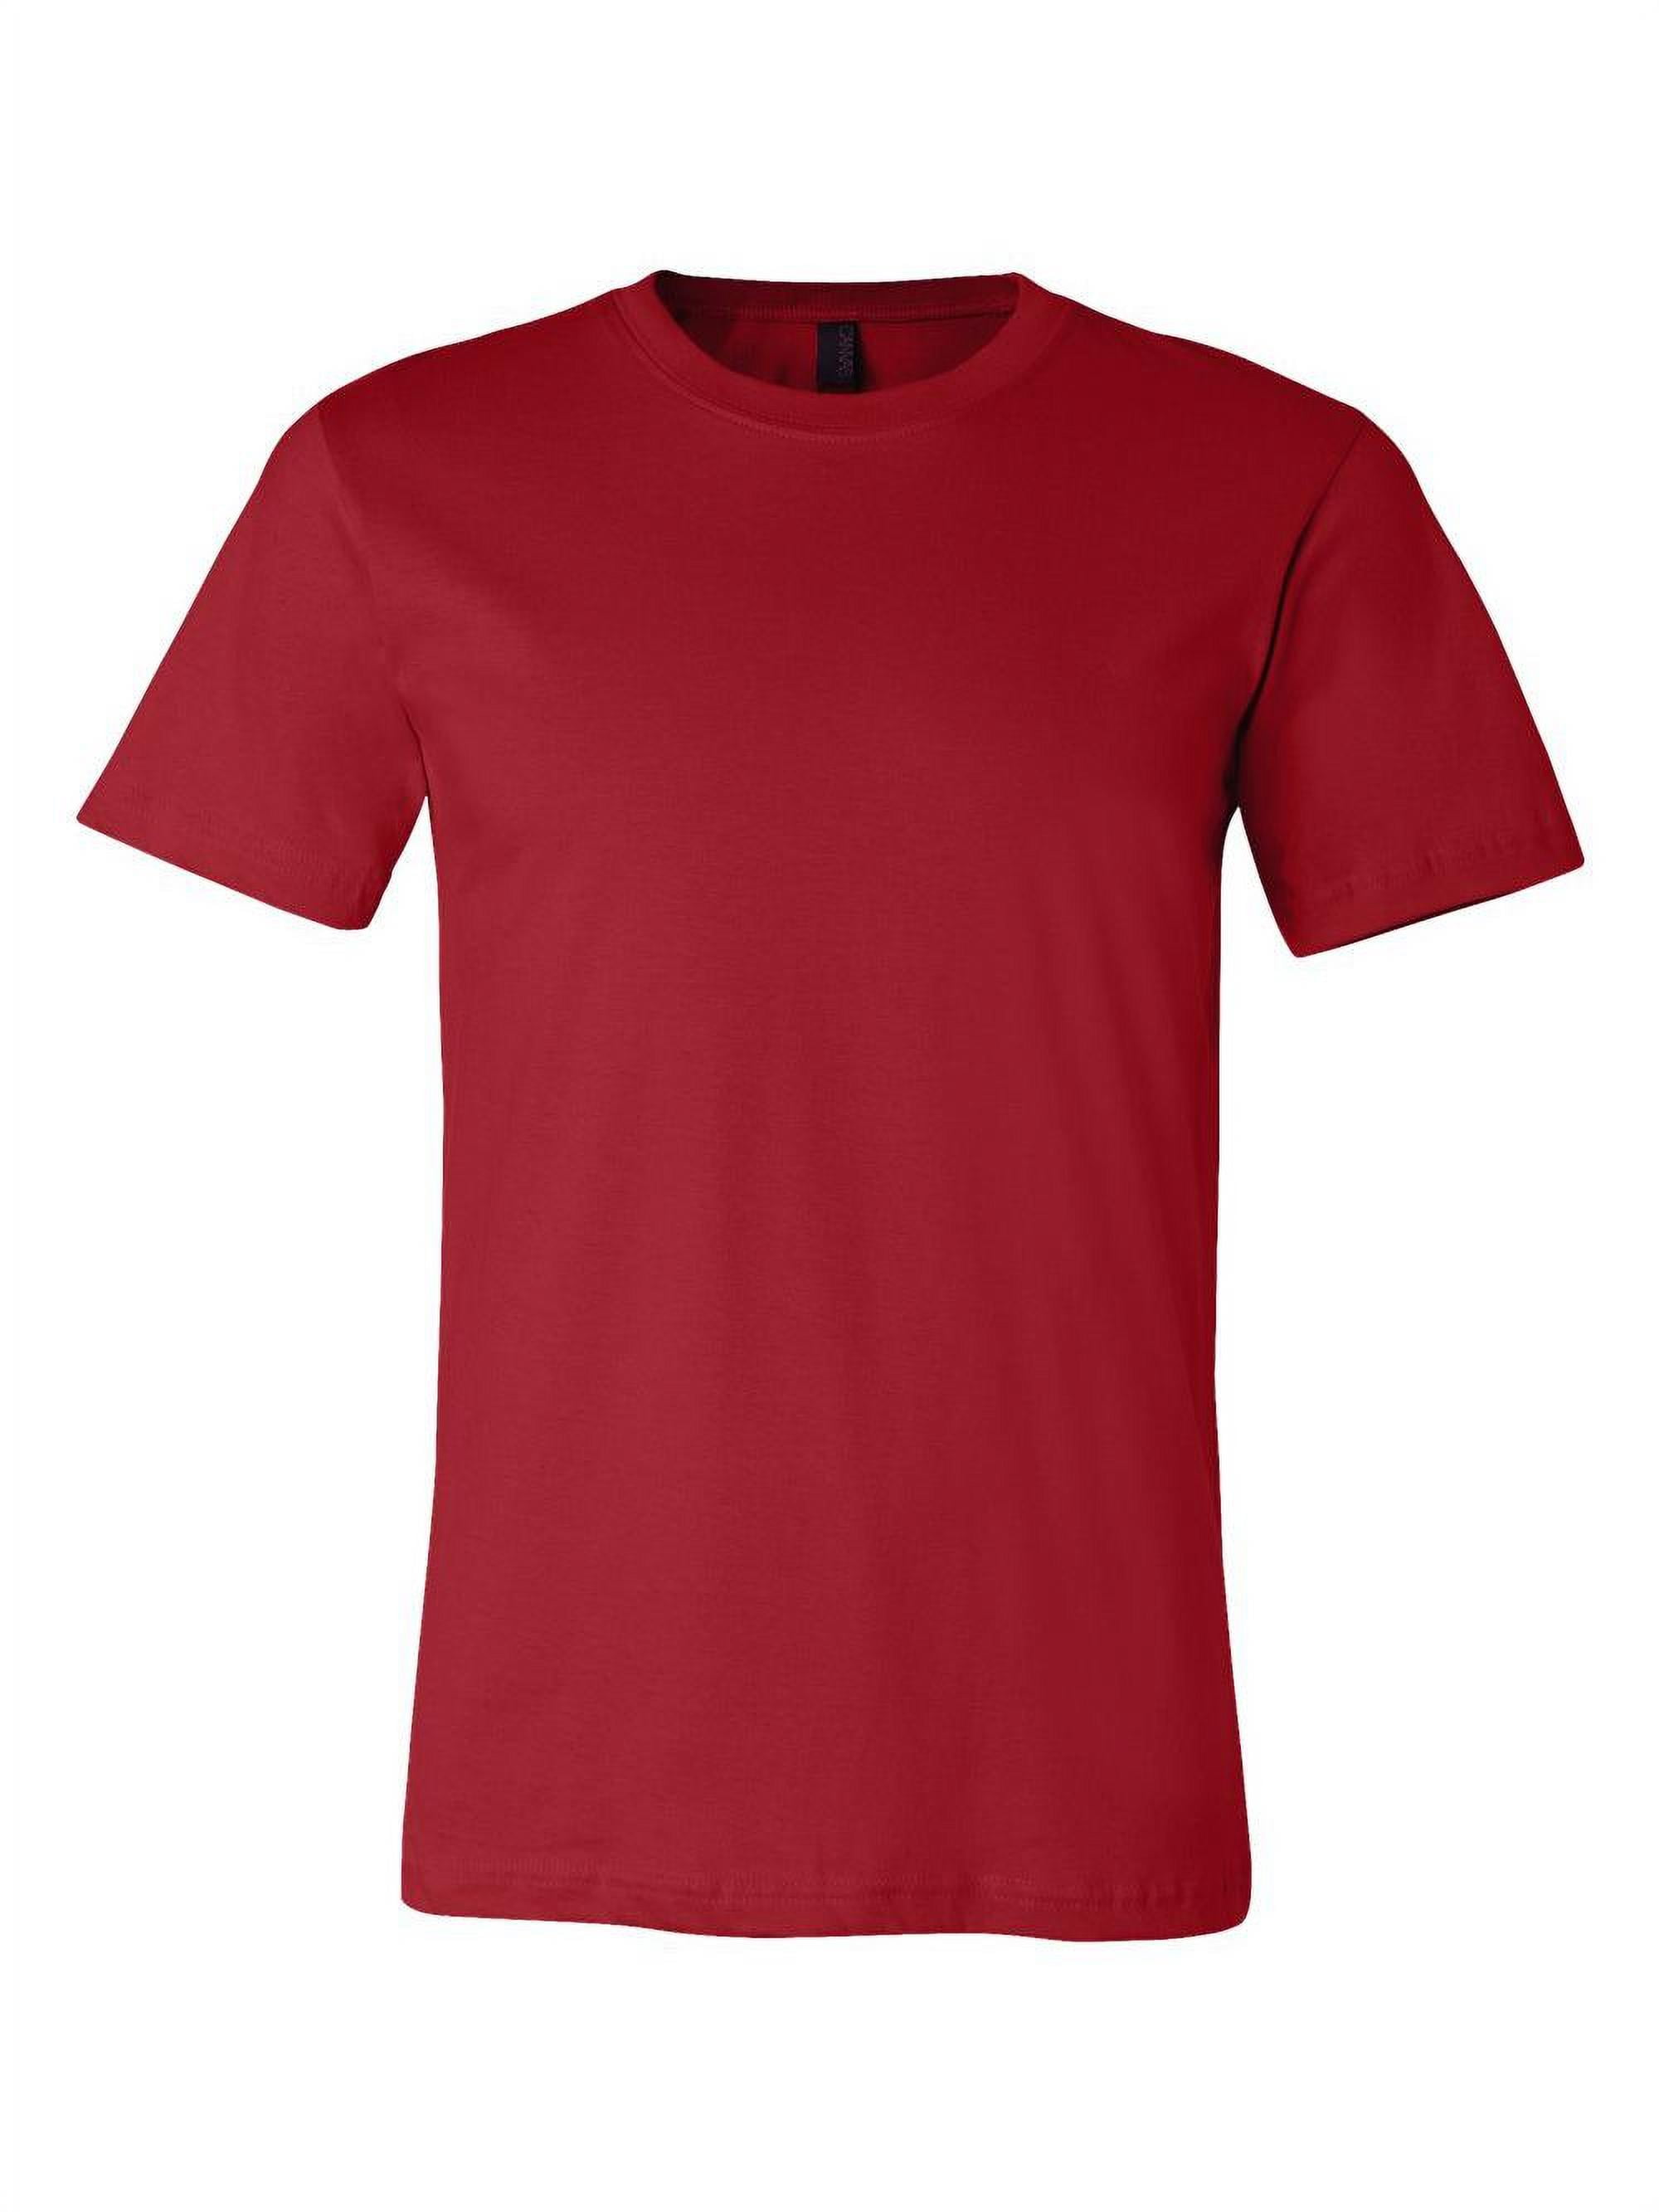 Adult Unisex T-Shirt Mountain Jay Bella Canvas 3001 Jersey Short Sleeve Tee Vector Graphic